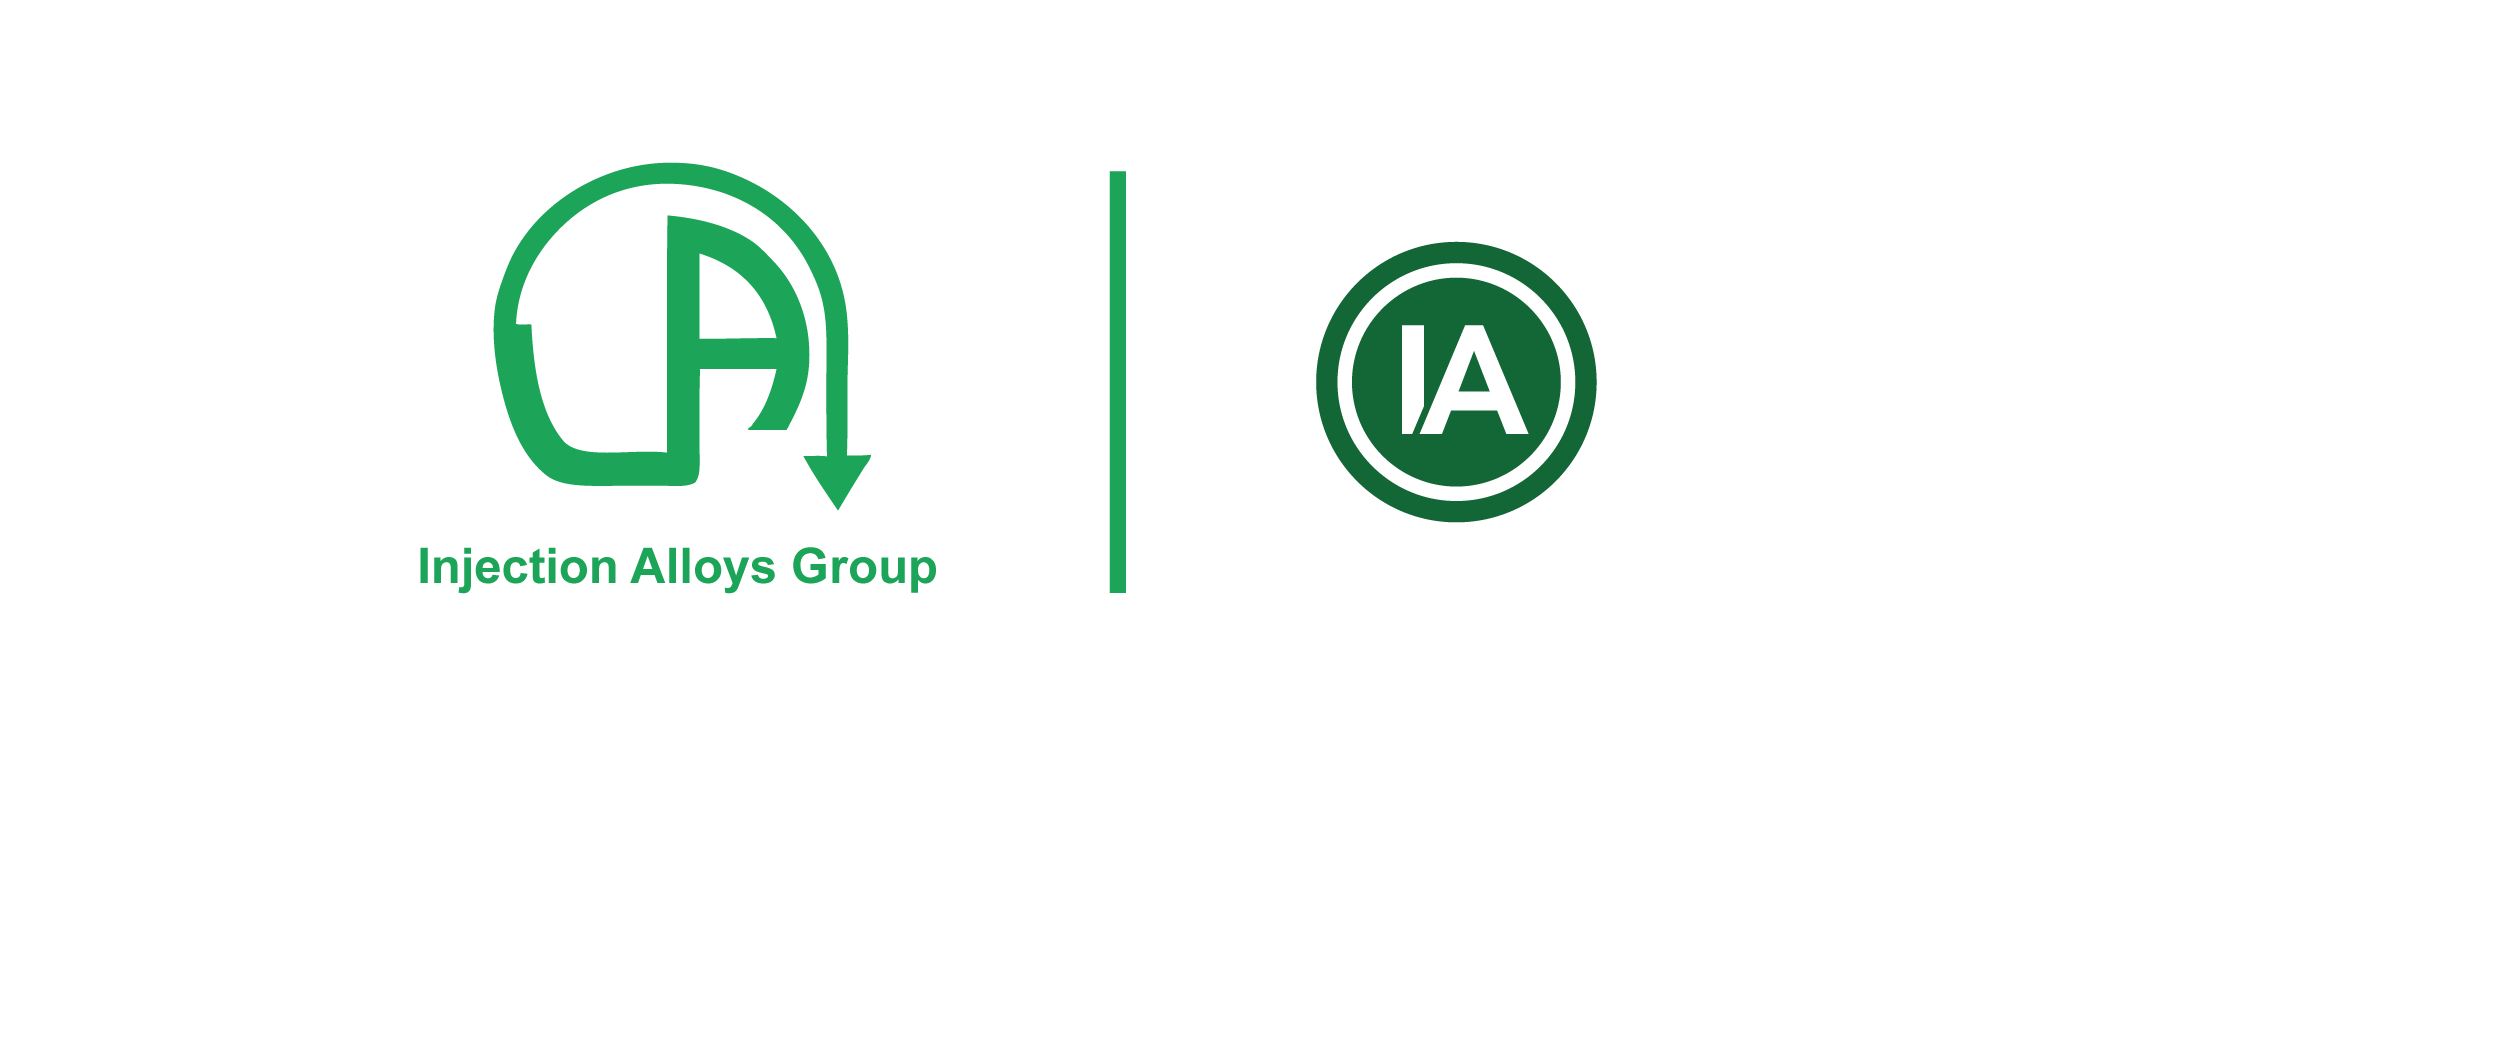 New Corporate Image